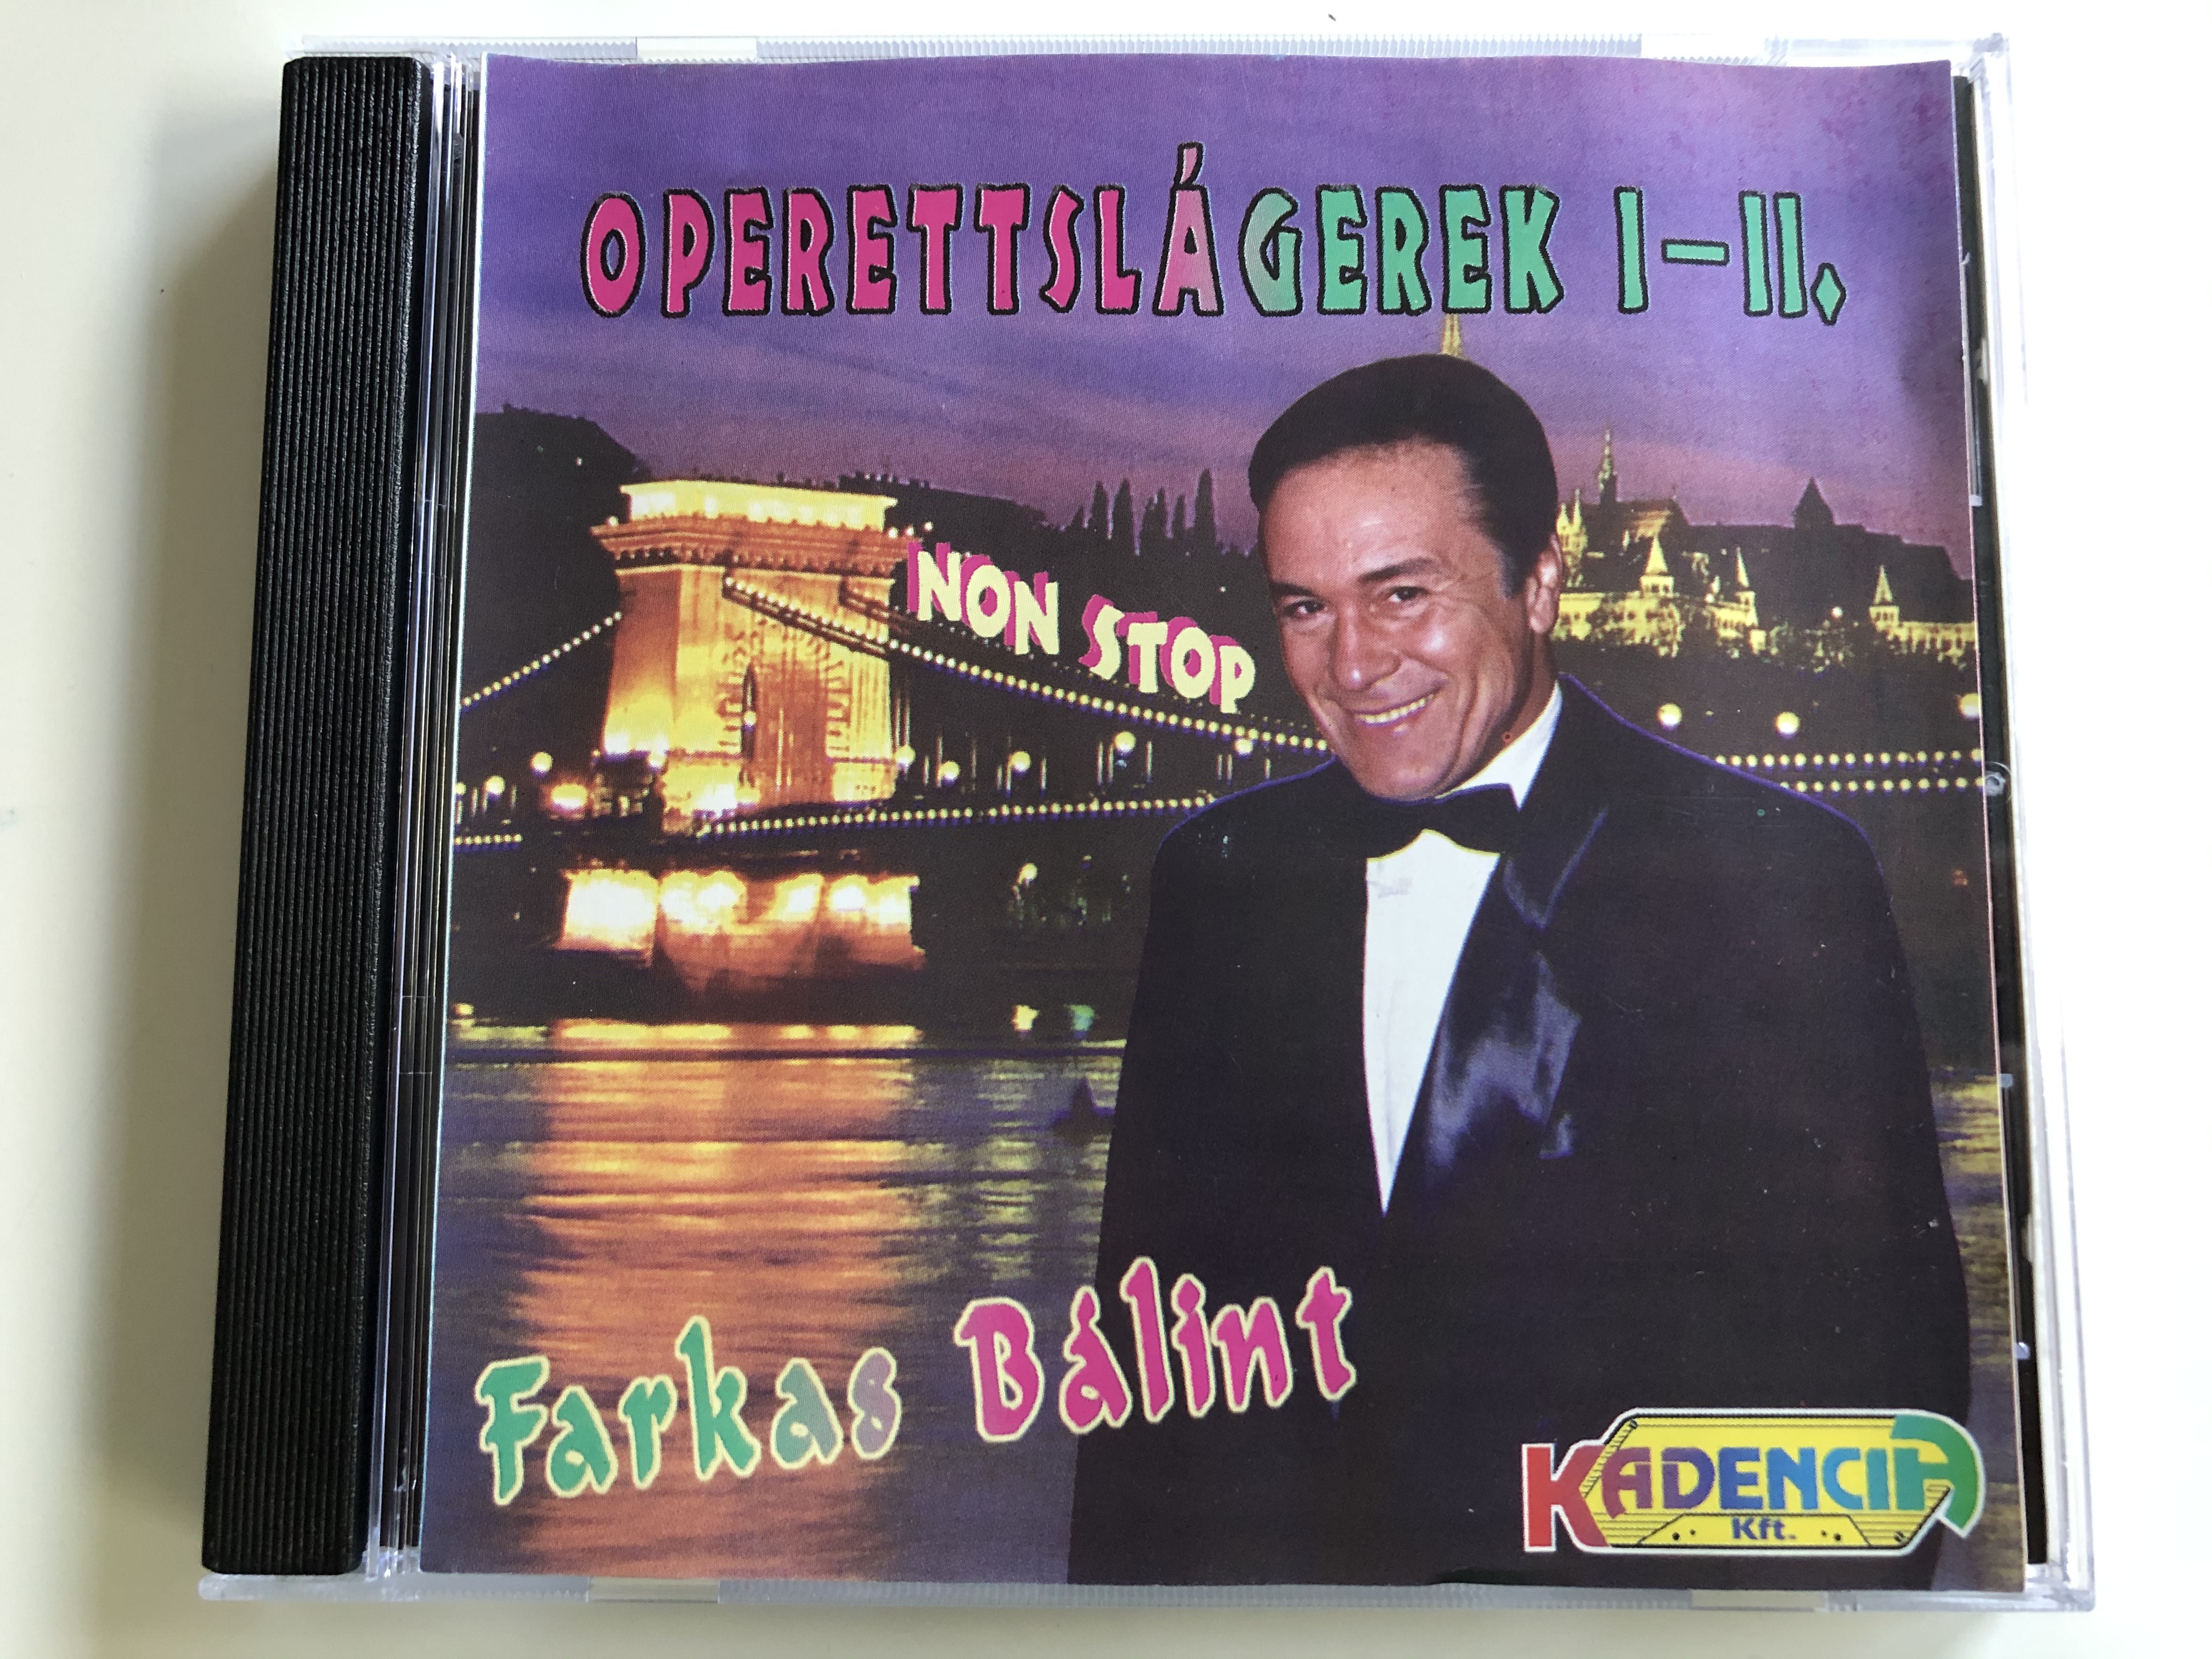 operettsl-gerek-i-ii.-farkas-b-lint-kadencia-kft.-audio-cd-1994-kacd-169-1-.jpg